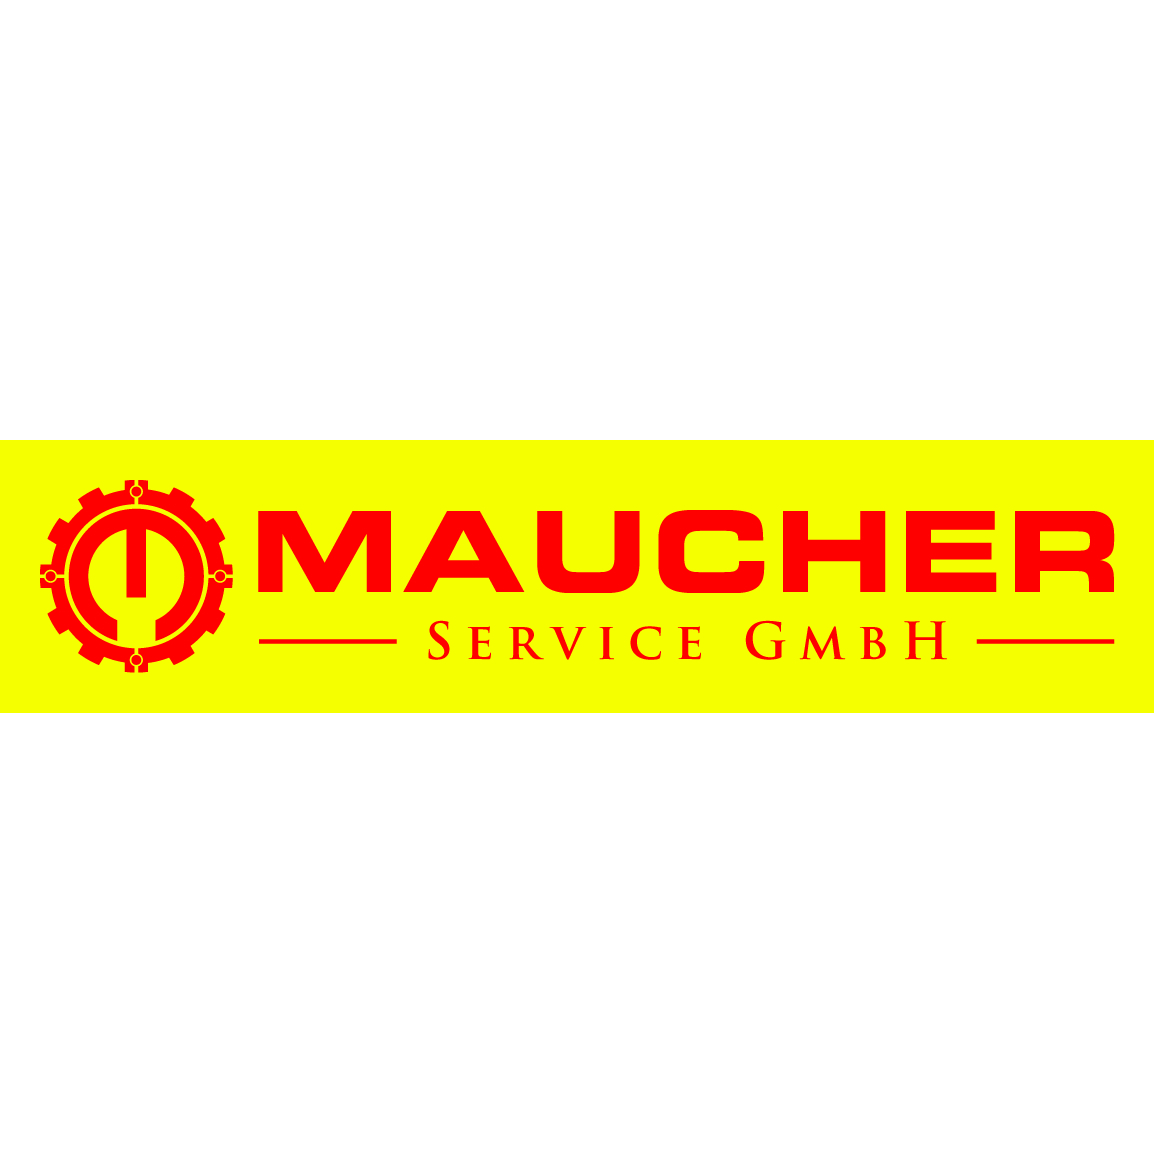 Maucher Service GmbH  